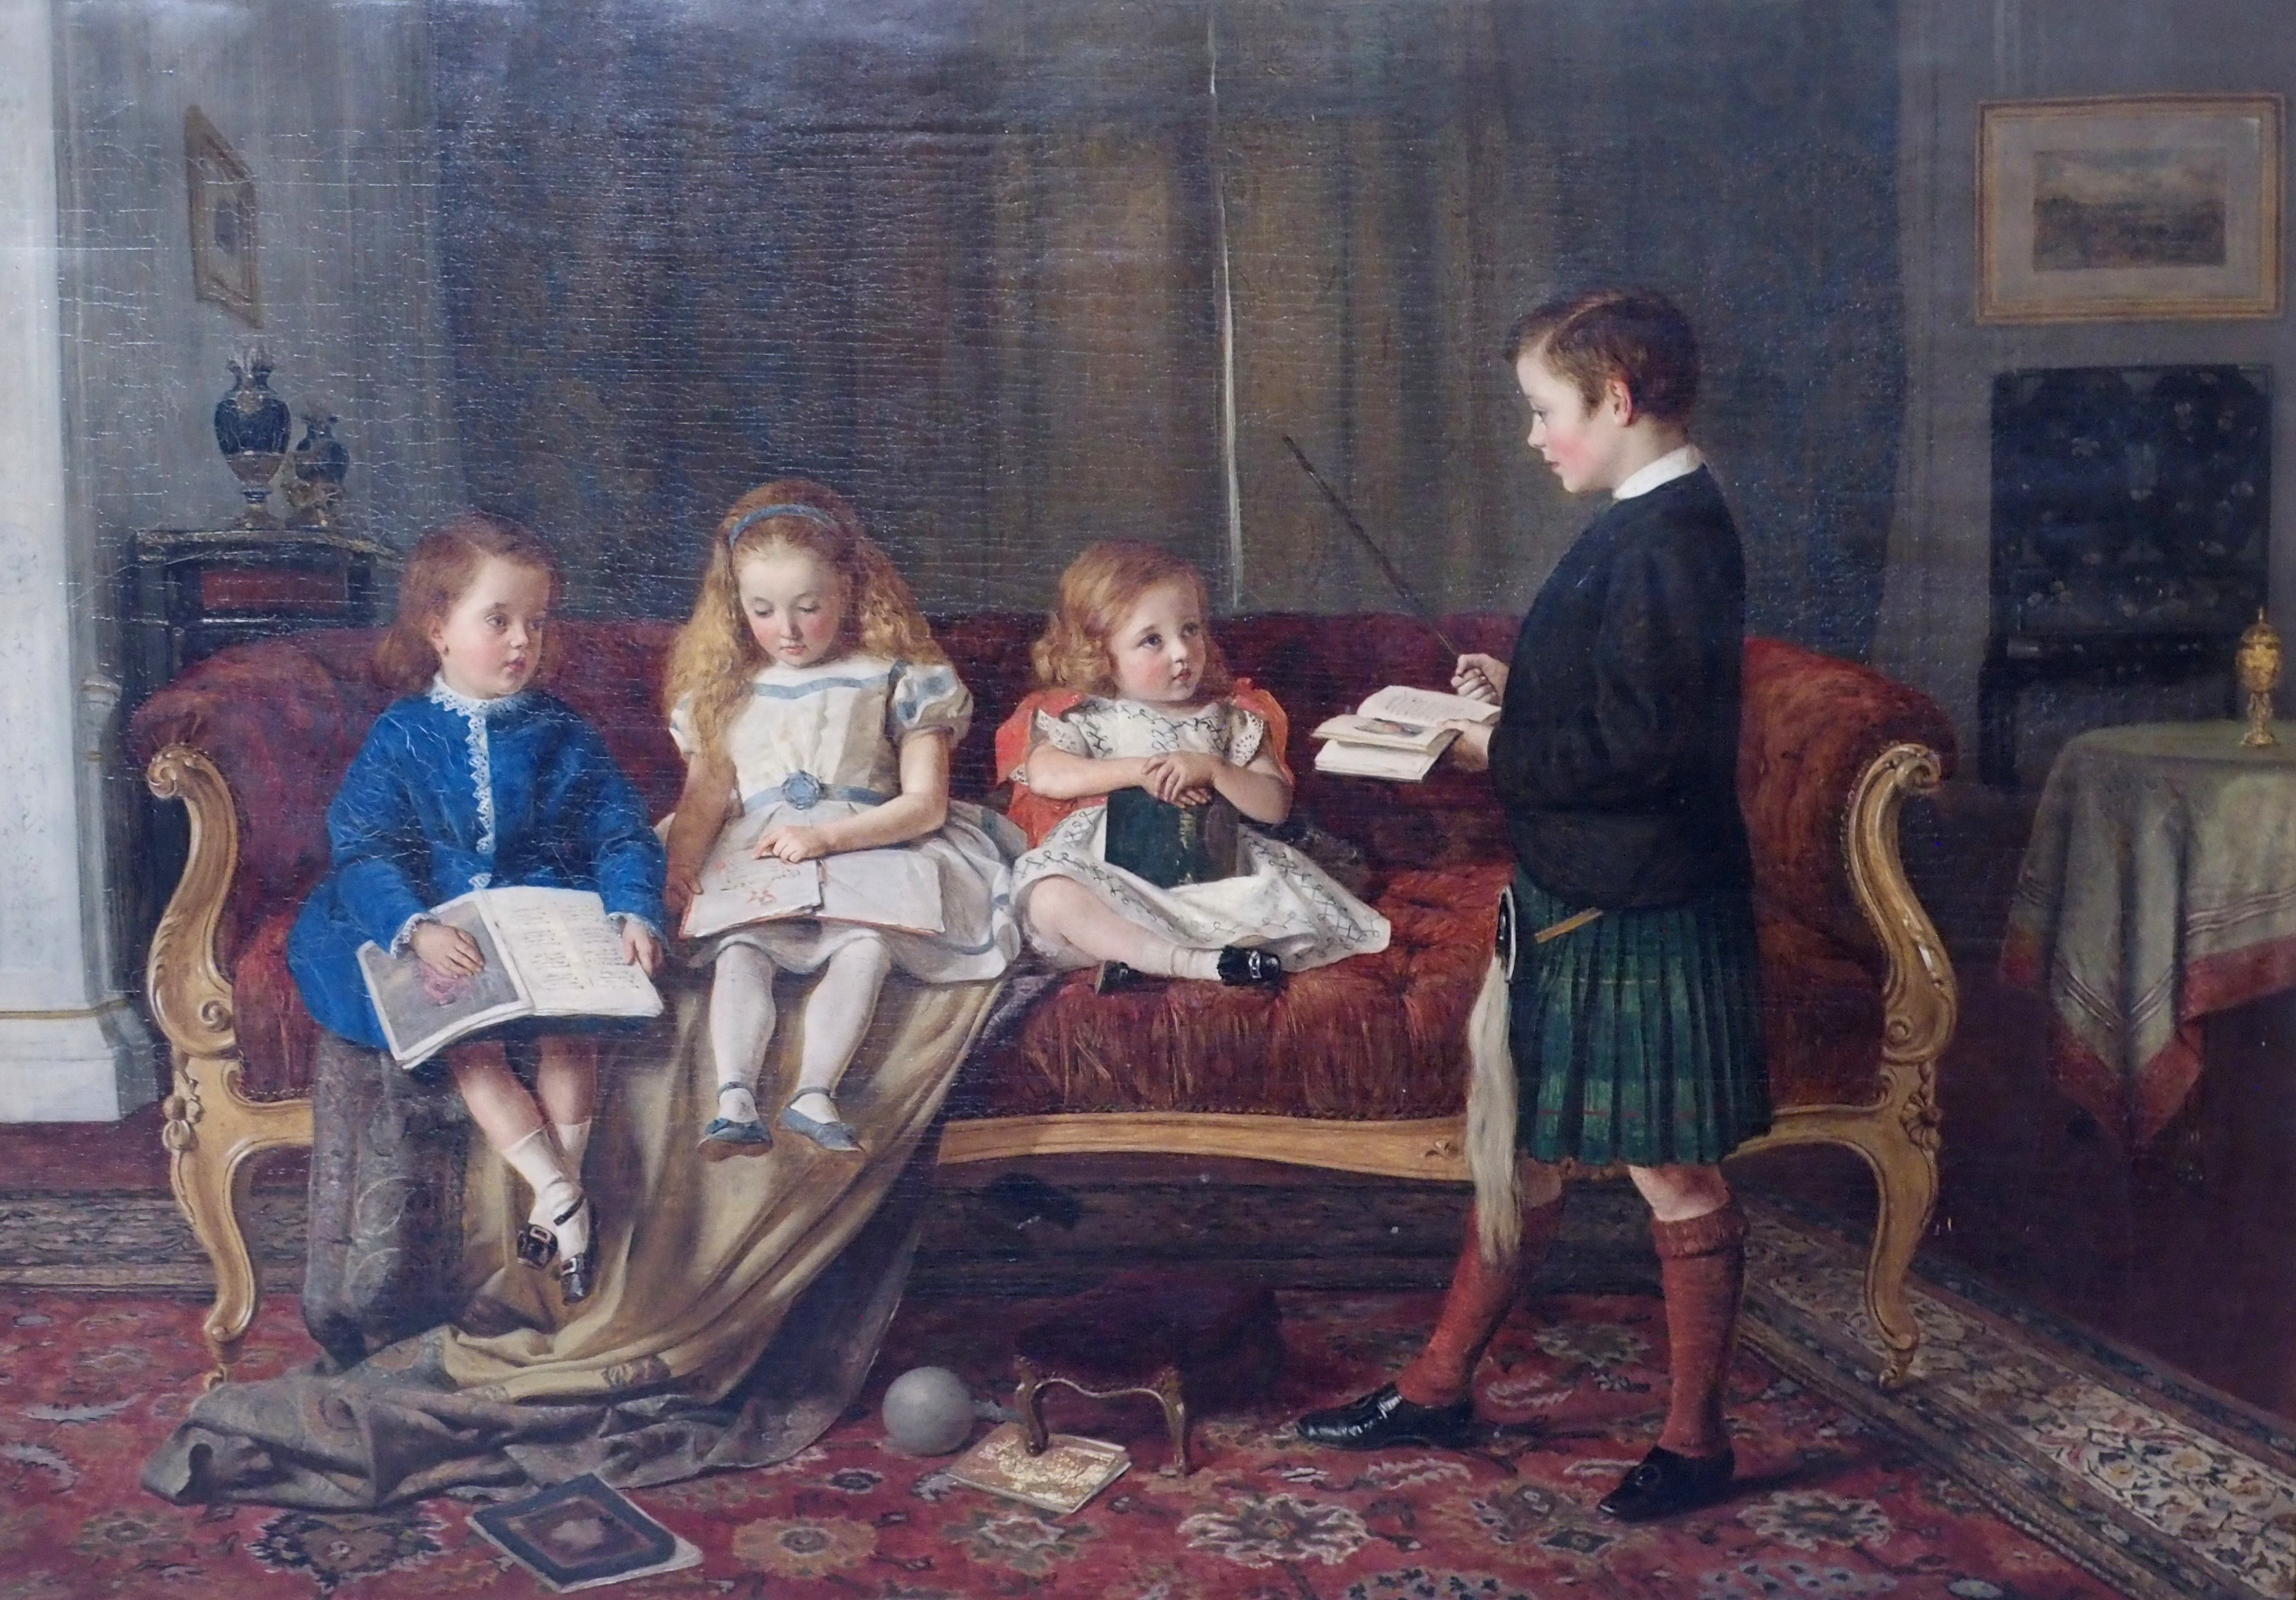 SCOTTISH SCHOOL (19TH CENTURY) THE LESSON C. 1882 Oil on canvas, 96.5 x 138cm (38 x 54 1/4") Group